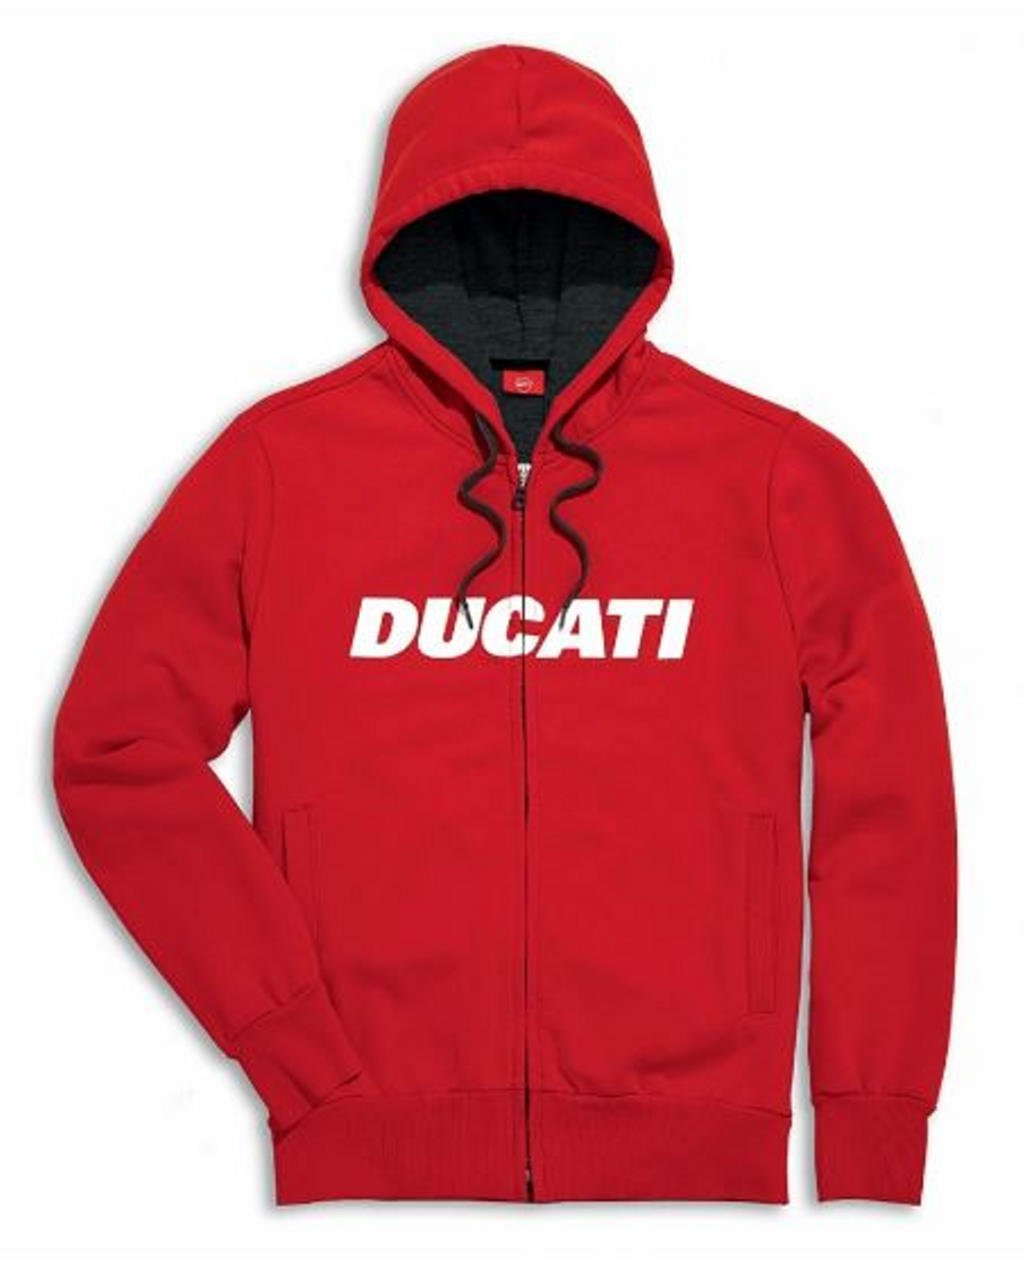 Ducati Ducatiana Zip-Up Hooded Sweatshirt 987693324